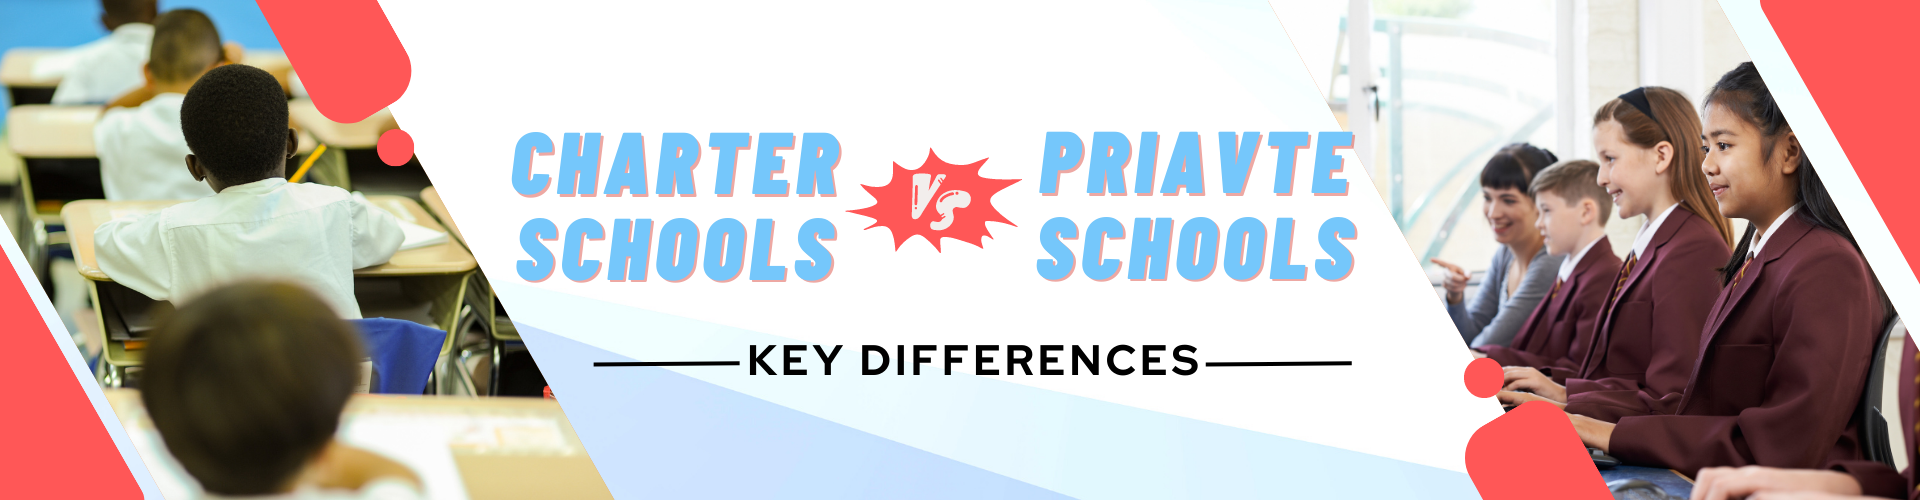 Charter Schools vs Private Schools